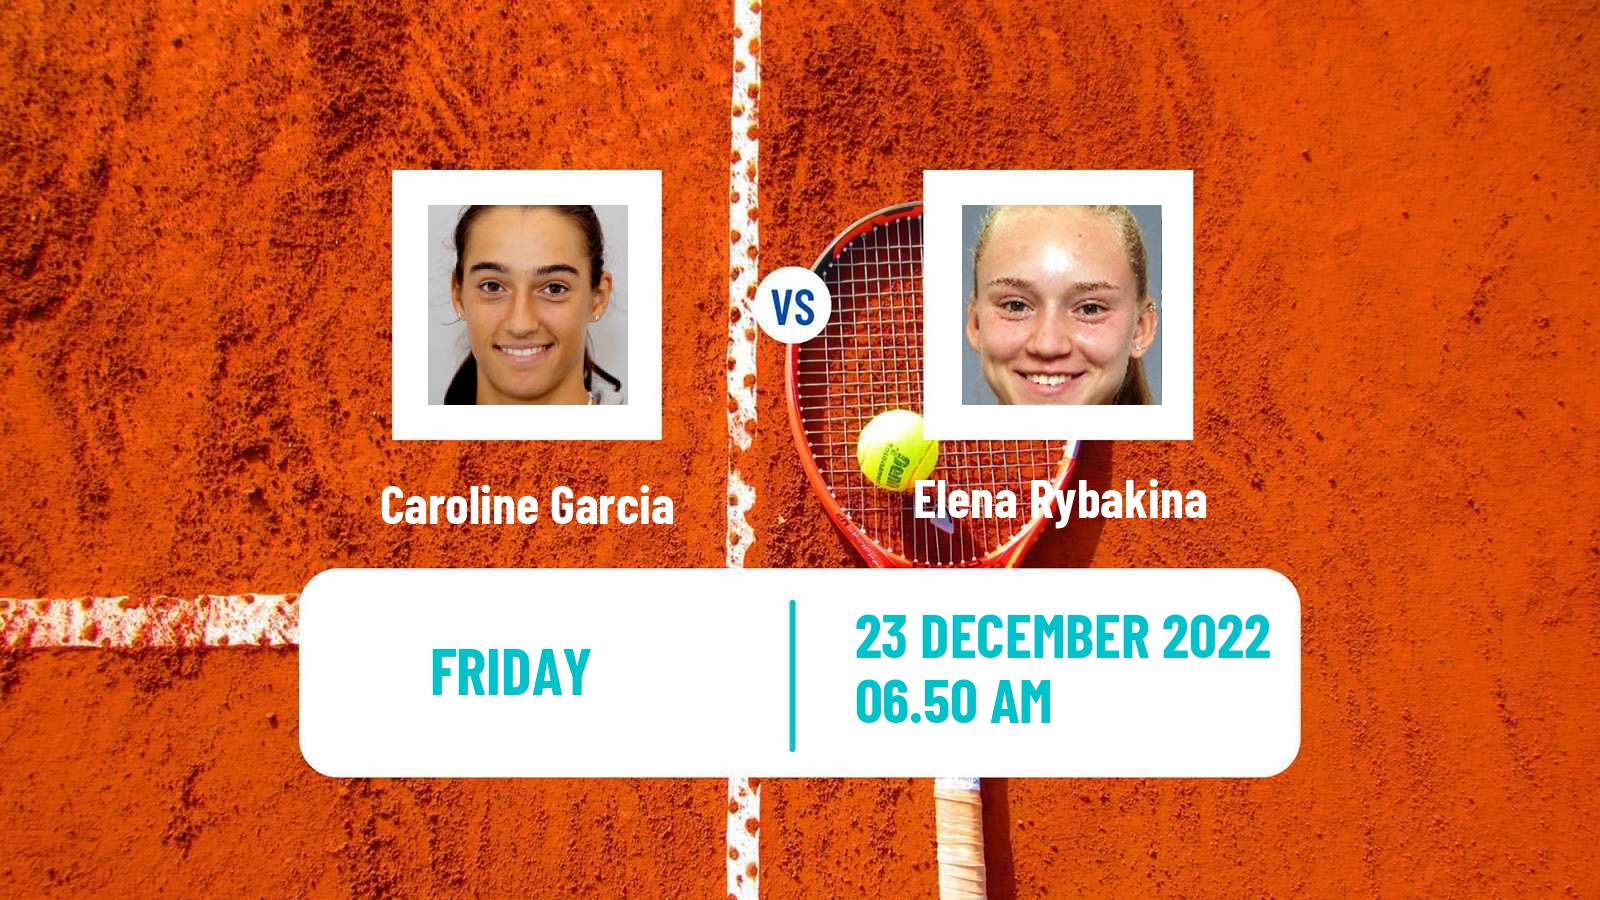 Tennis Exhibition World Tennis League Women Caroline Garcia - Elena Rybakina